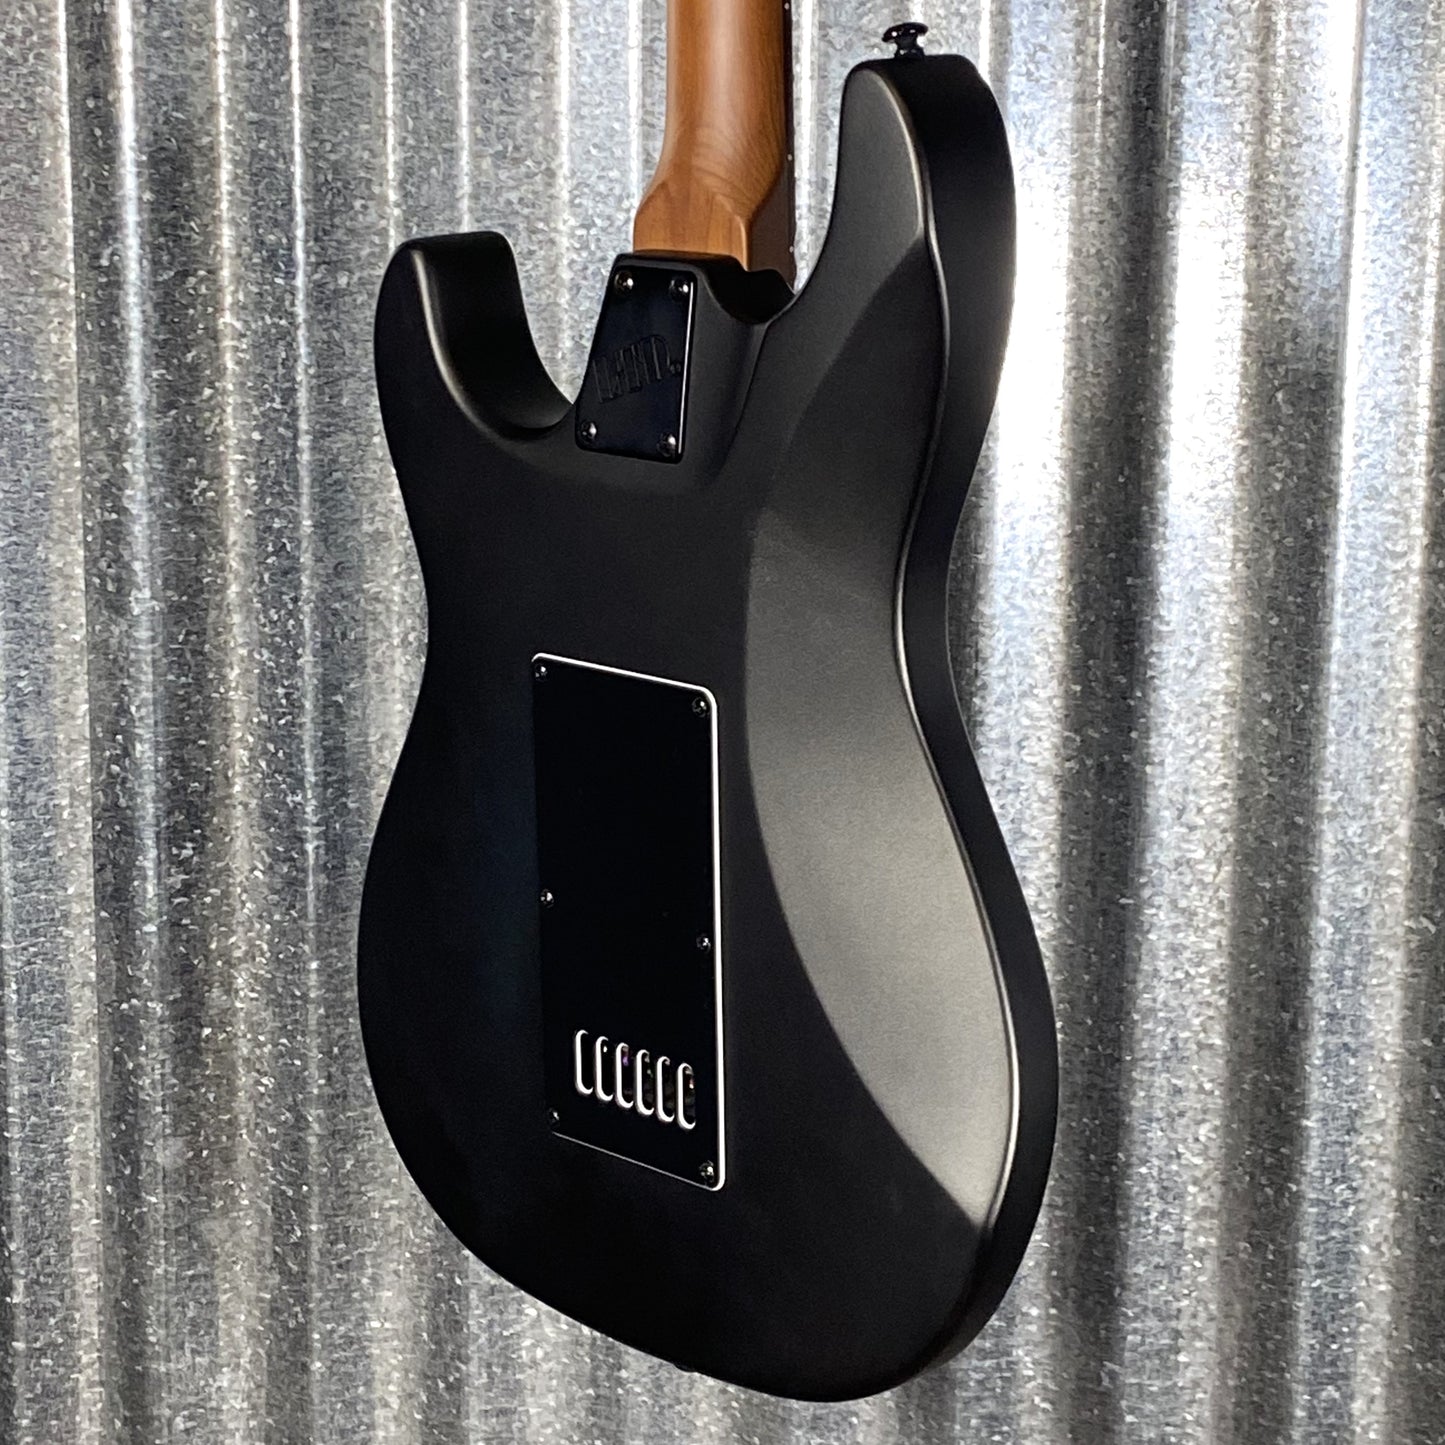 ESP LTD SN-1000 Evertune Charcoal Metallic Satin Guitar LSN1000ETCHMS #0639 Used